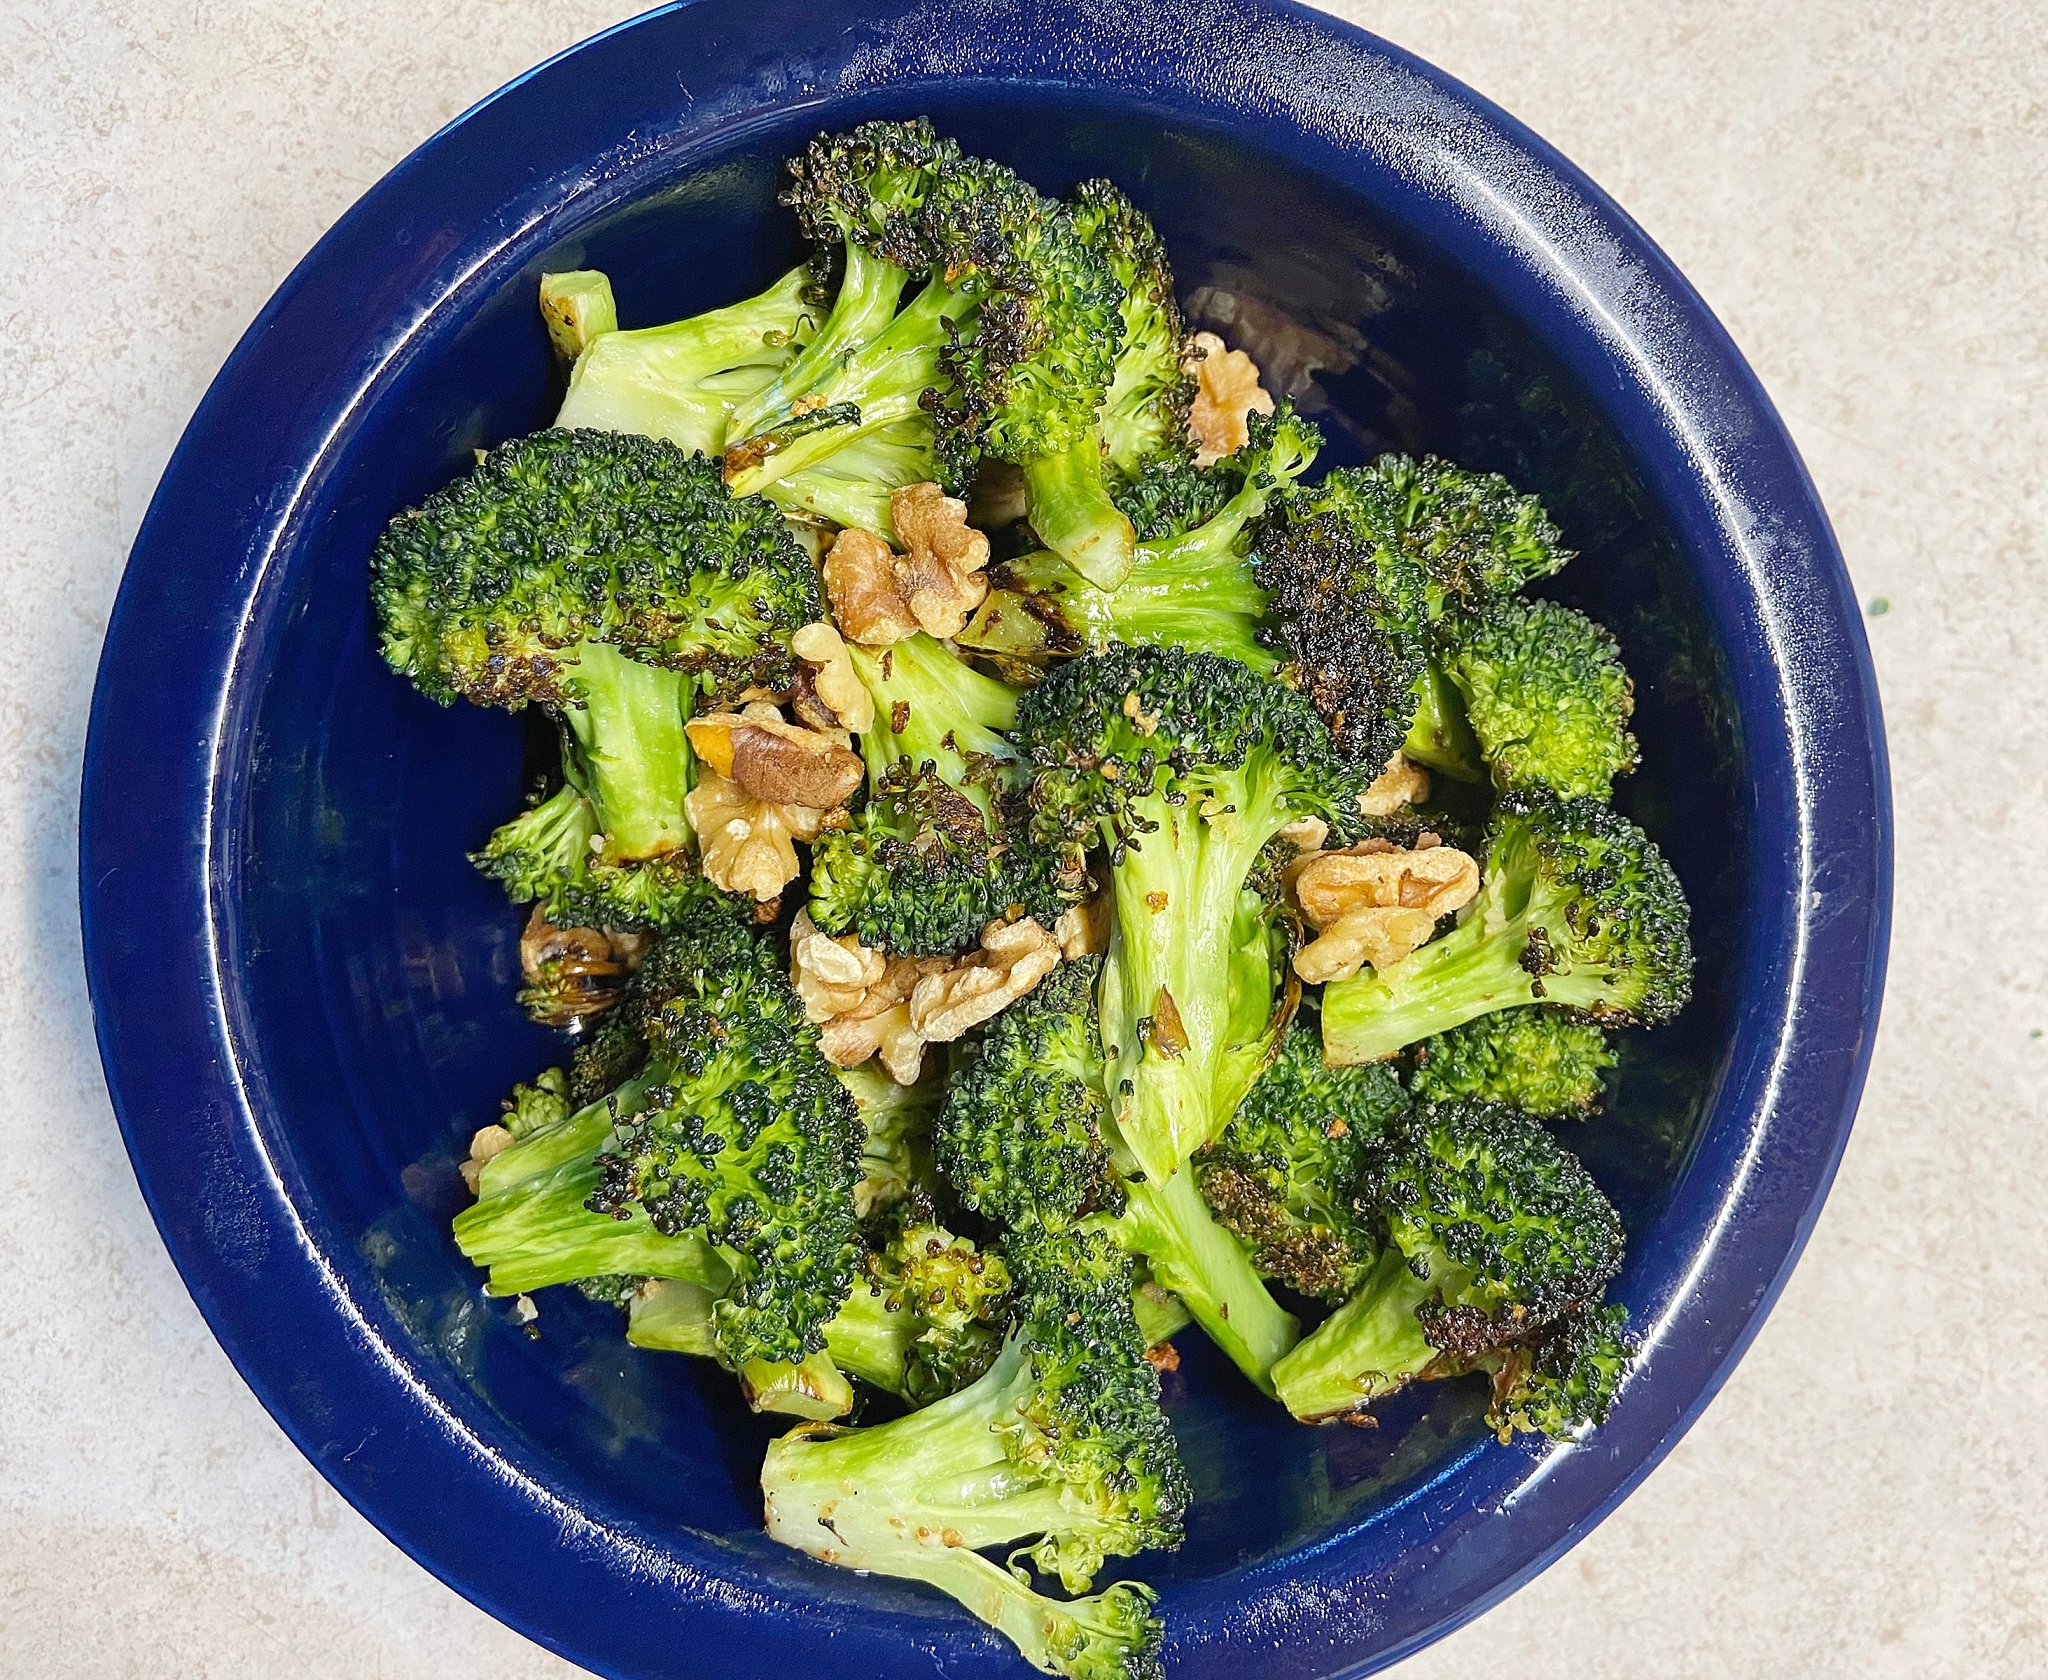 Roasted broccoli with walnuts